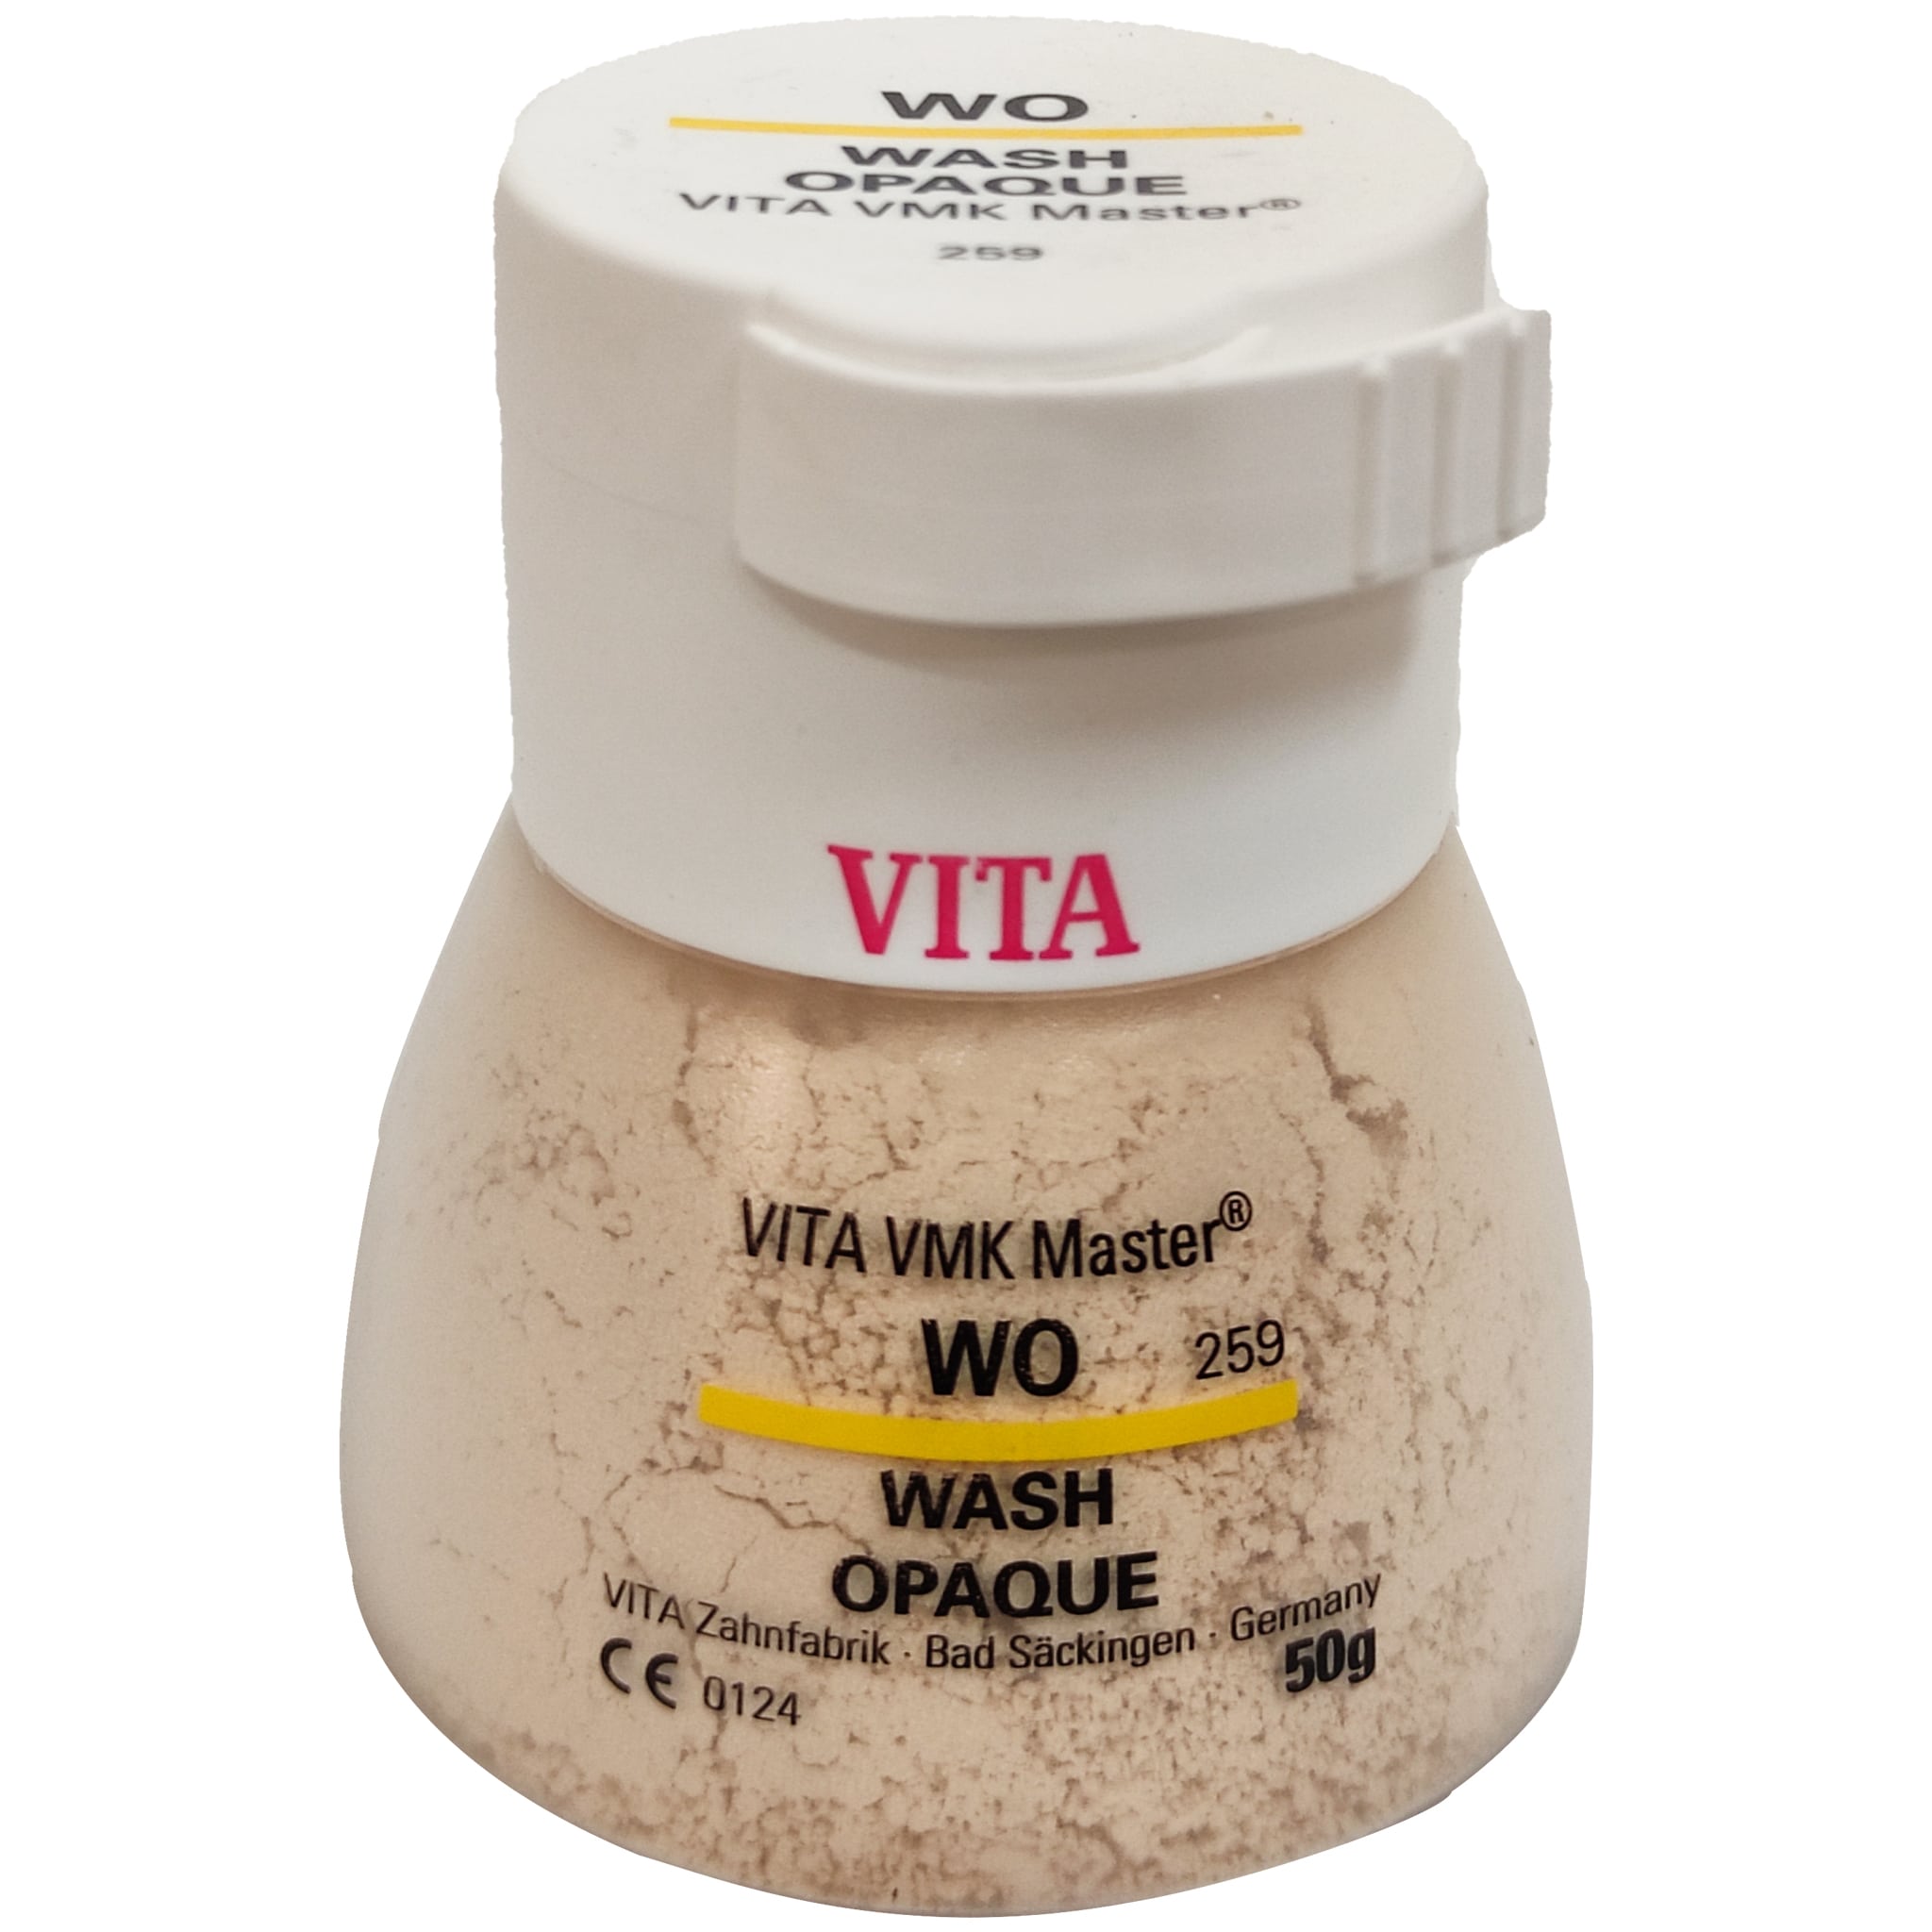 Vita VMK Master Wash Opaque 50g